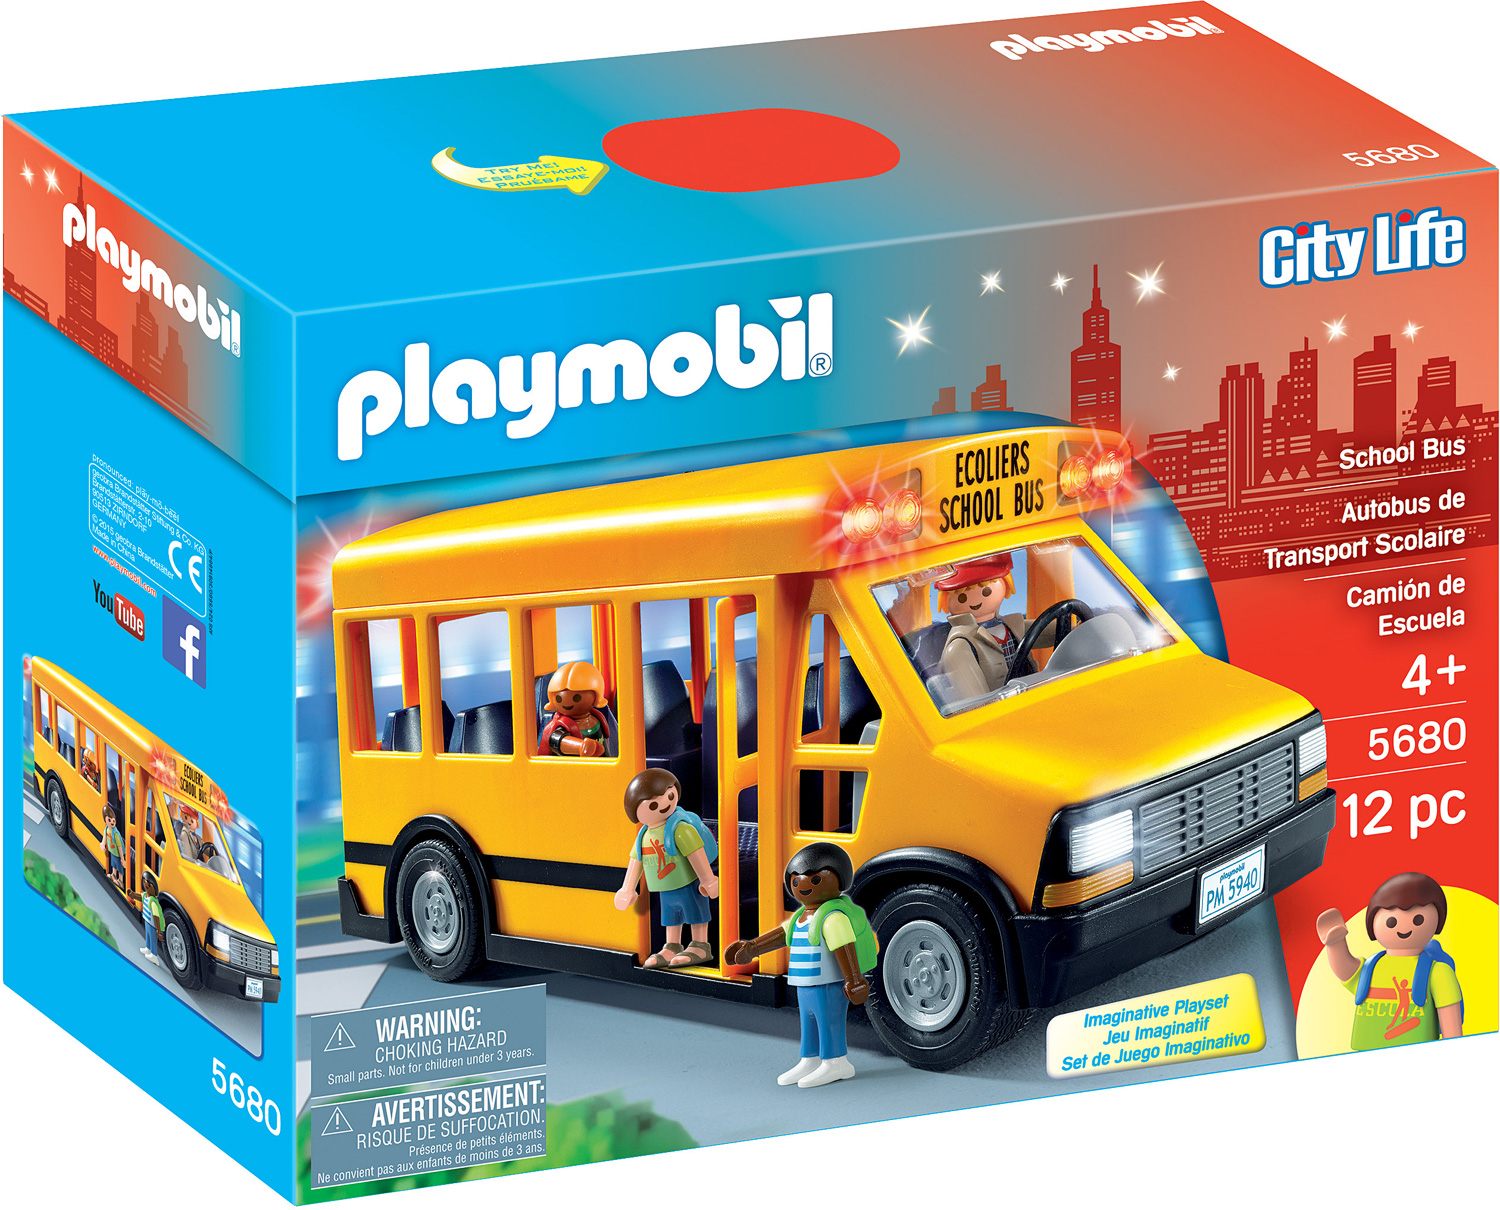 Livsmedelsbutik Playmobil City Life